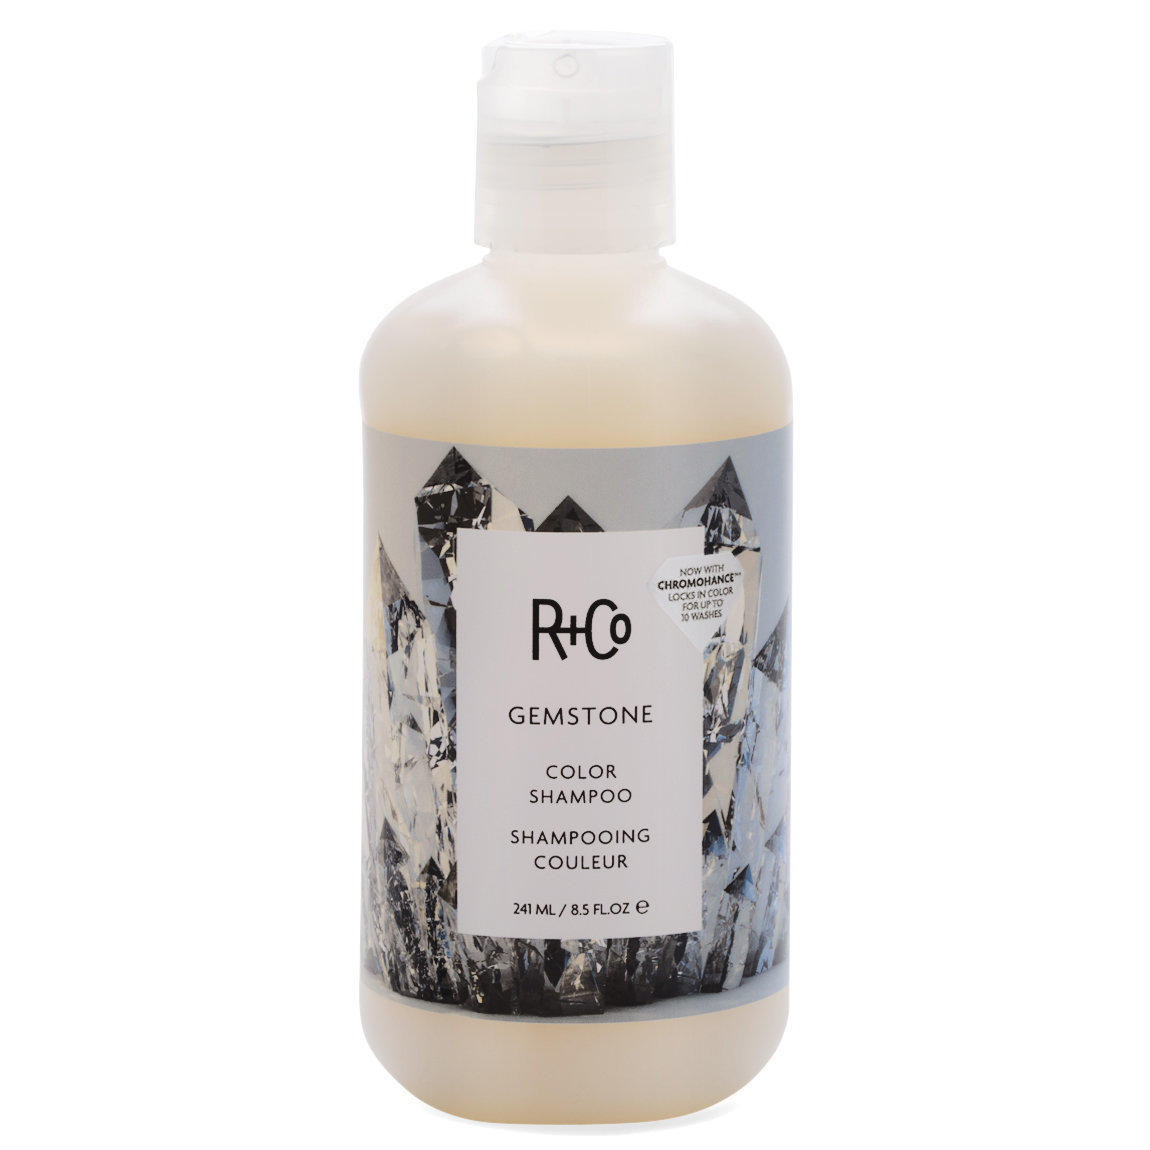 R+Co Gemstone Color Shampoo  8.5 oz alternative view 1 - product swatch.